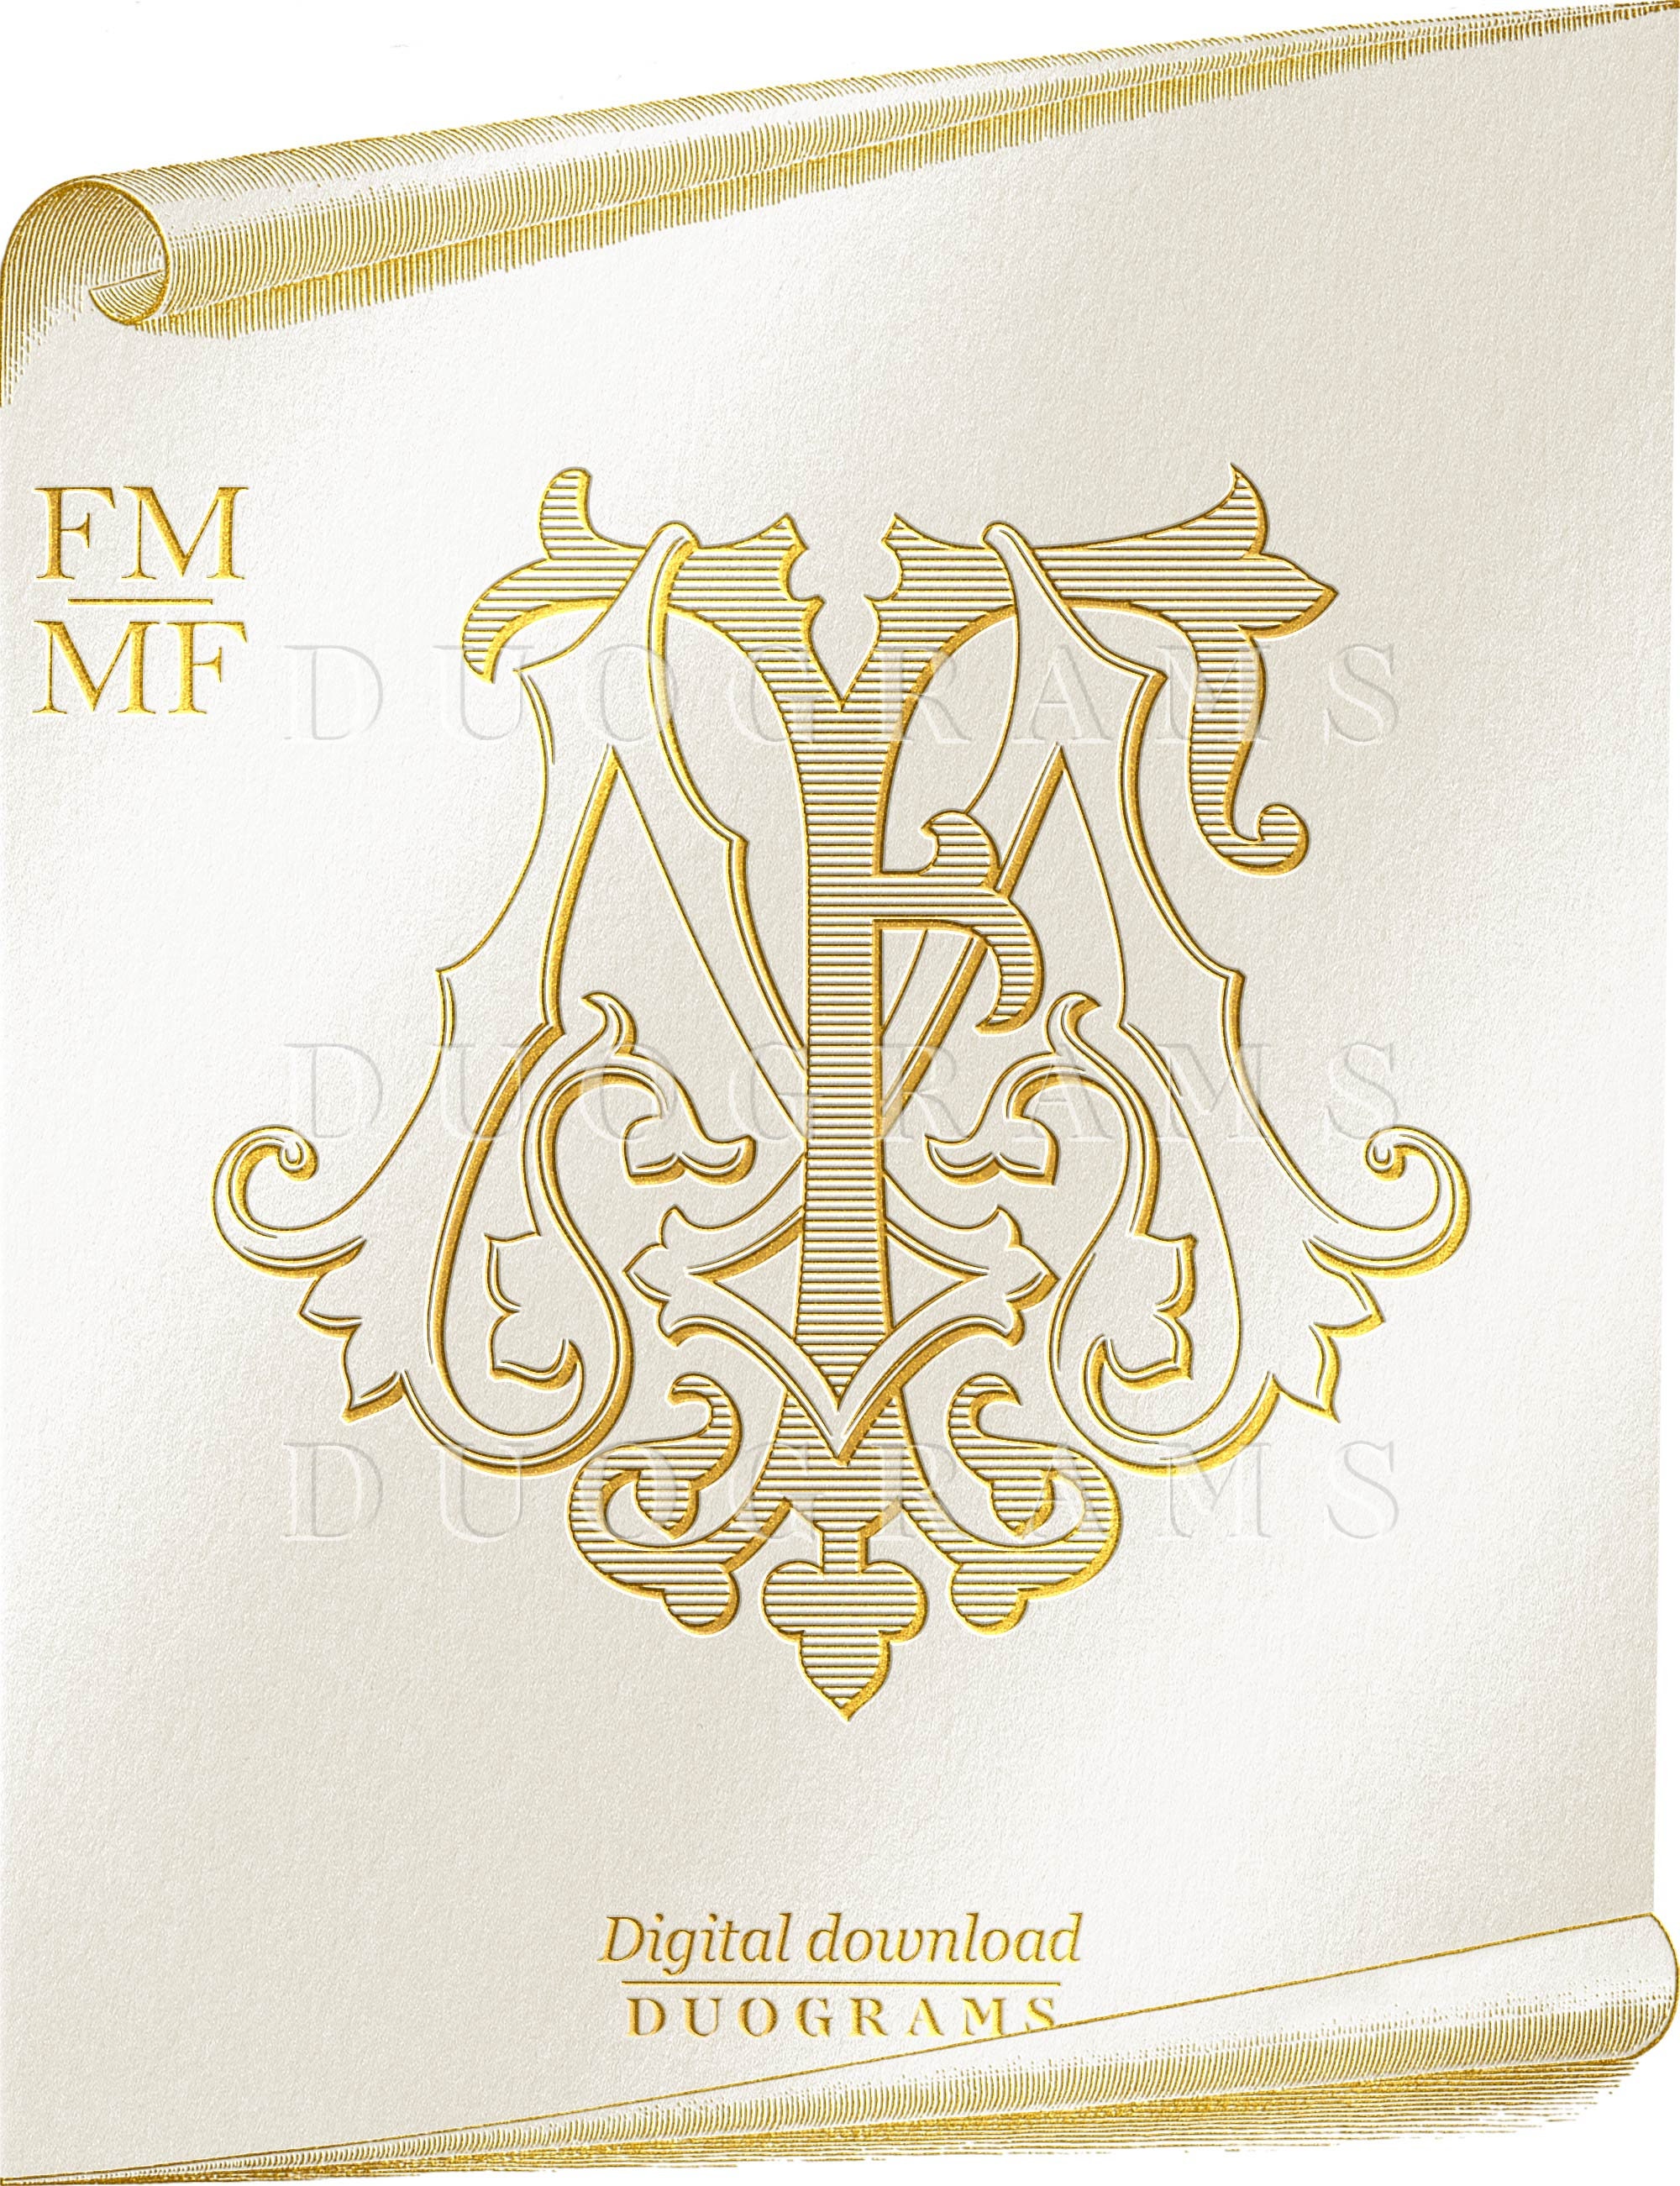 Elegant, Serious, Wedding Logo Design for M & M by day2daydesigns